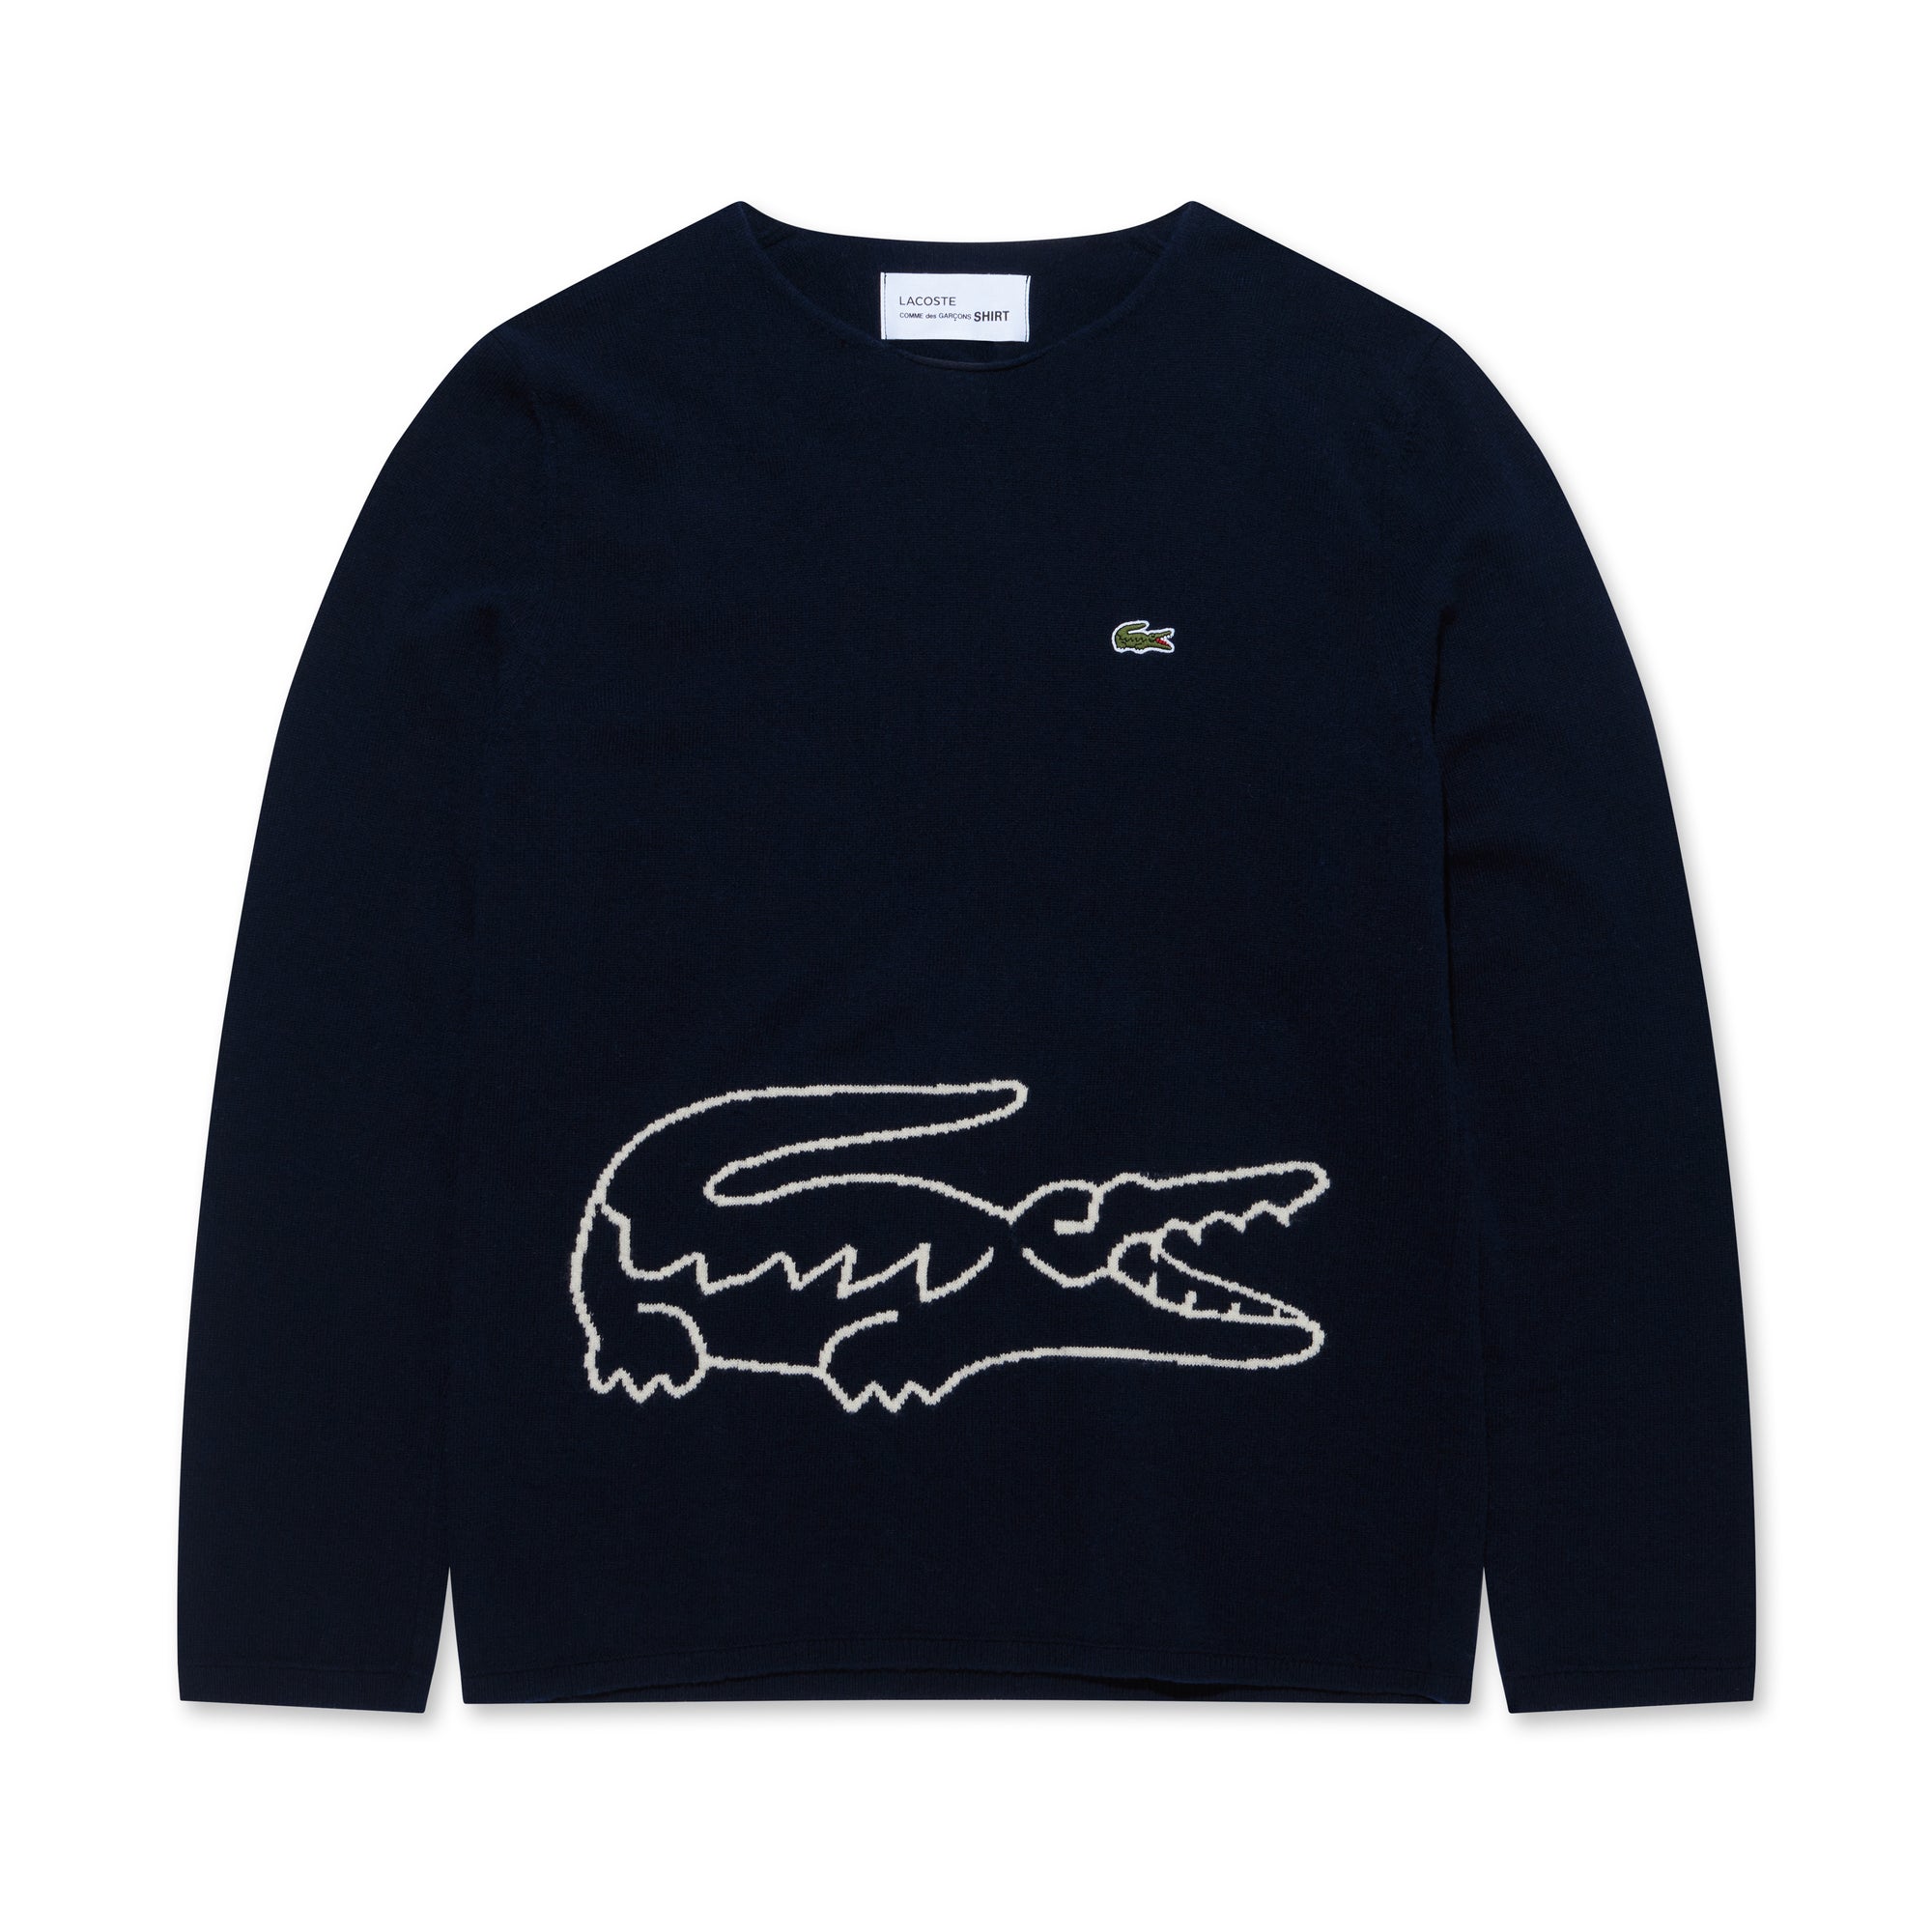 CDG Shirt - Lacoste Men’s Knit Sweater - (Black) view 5